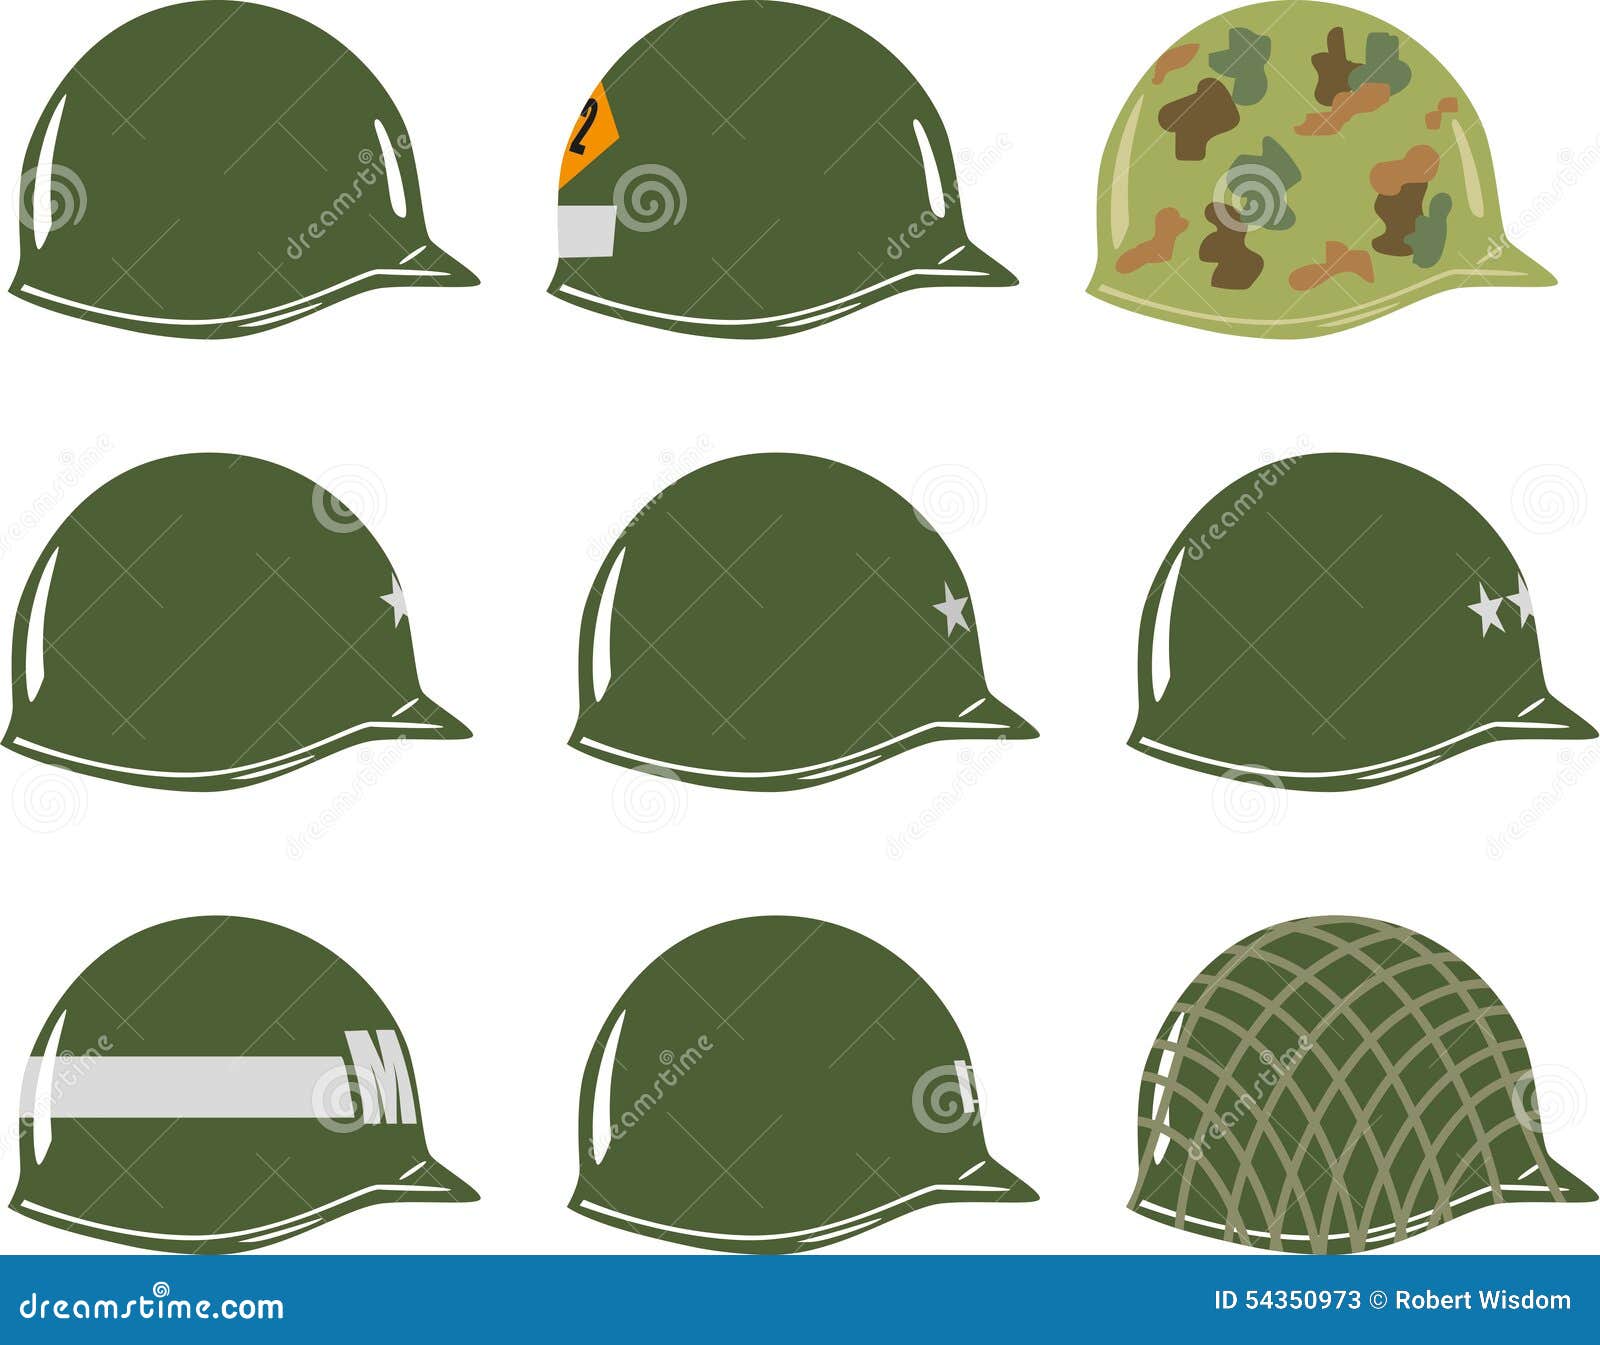 Ww2 american helmet markings